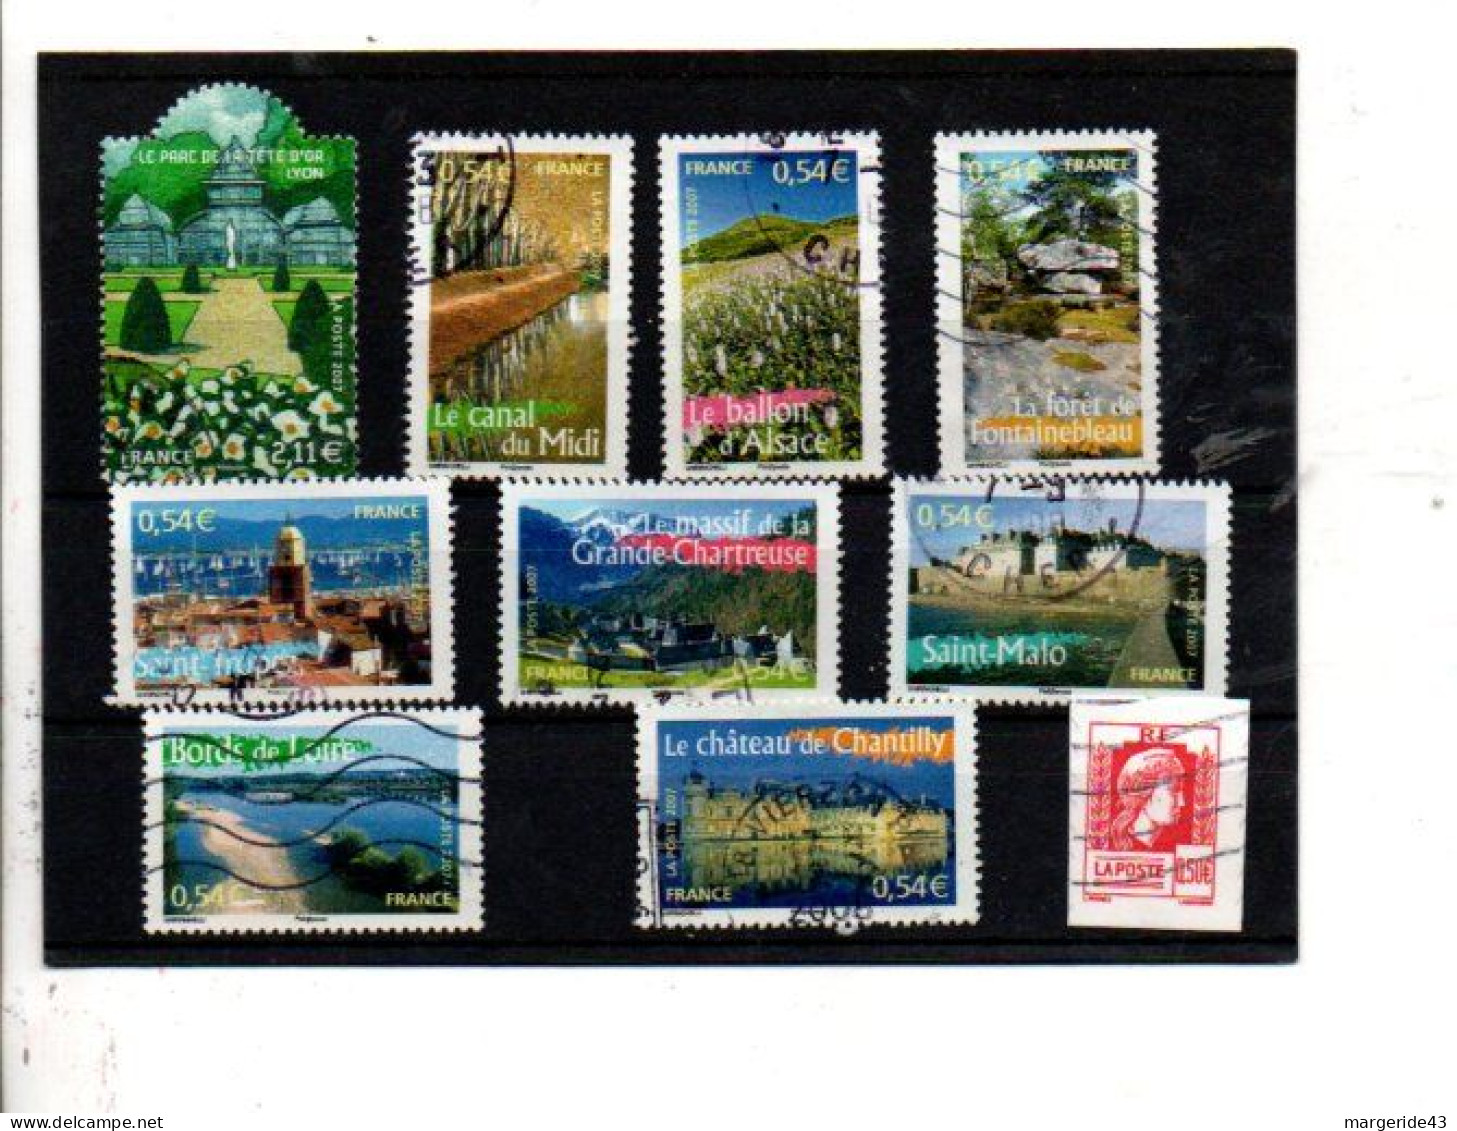 FRANCE LOT D'OBLITERES - Lots & Kiloware (mixtures) - Max. 999 Stamps